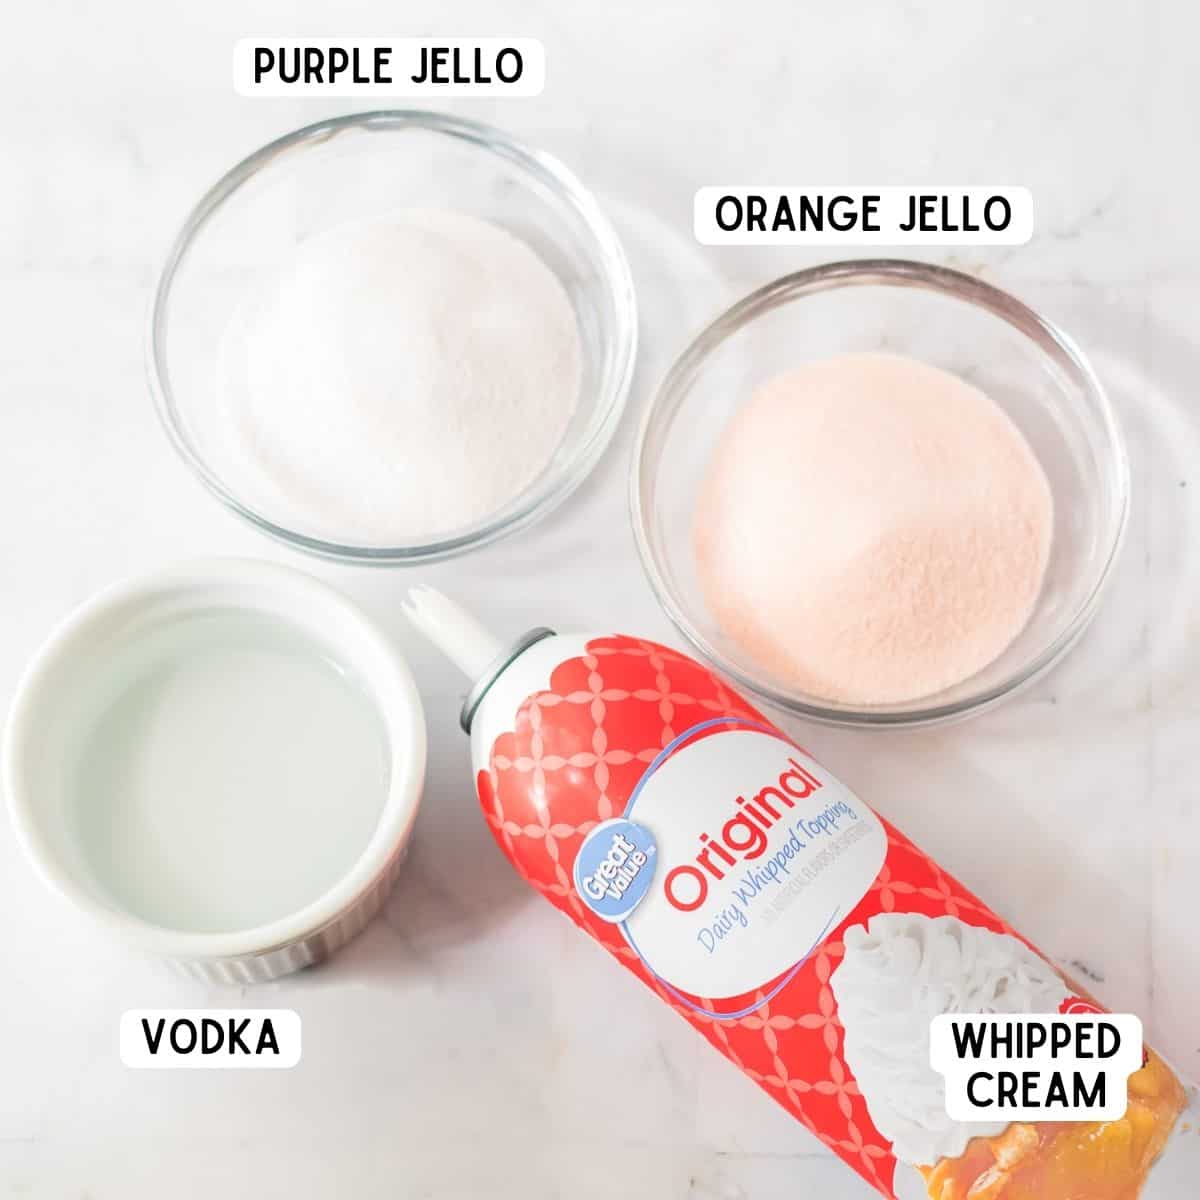 Ingredients for Halloween shots: orange jello, purple jello, whipped cream, vodka.